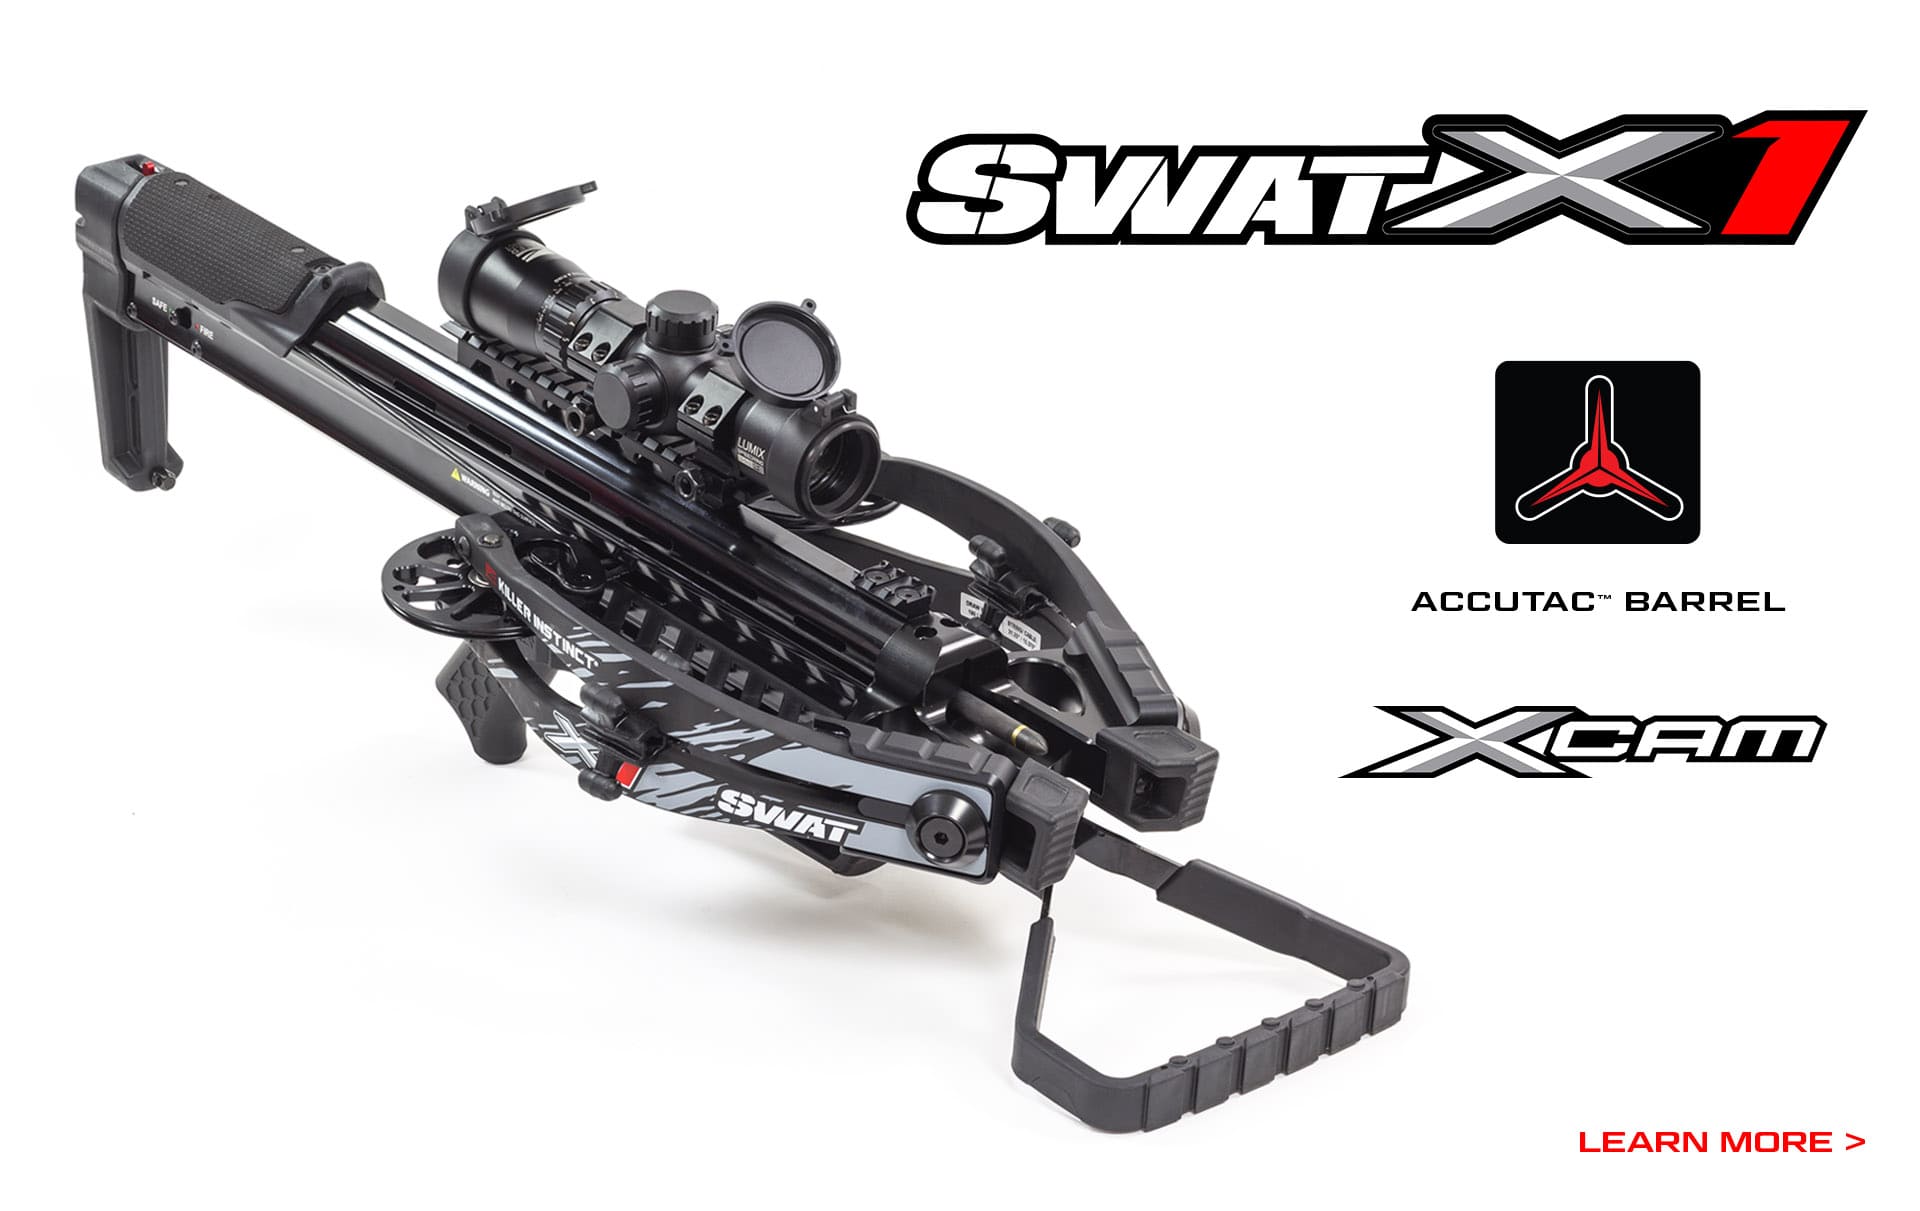 Swat-X1- X cam